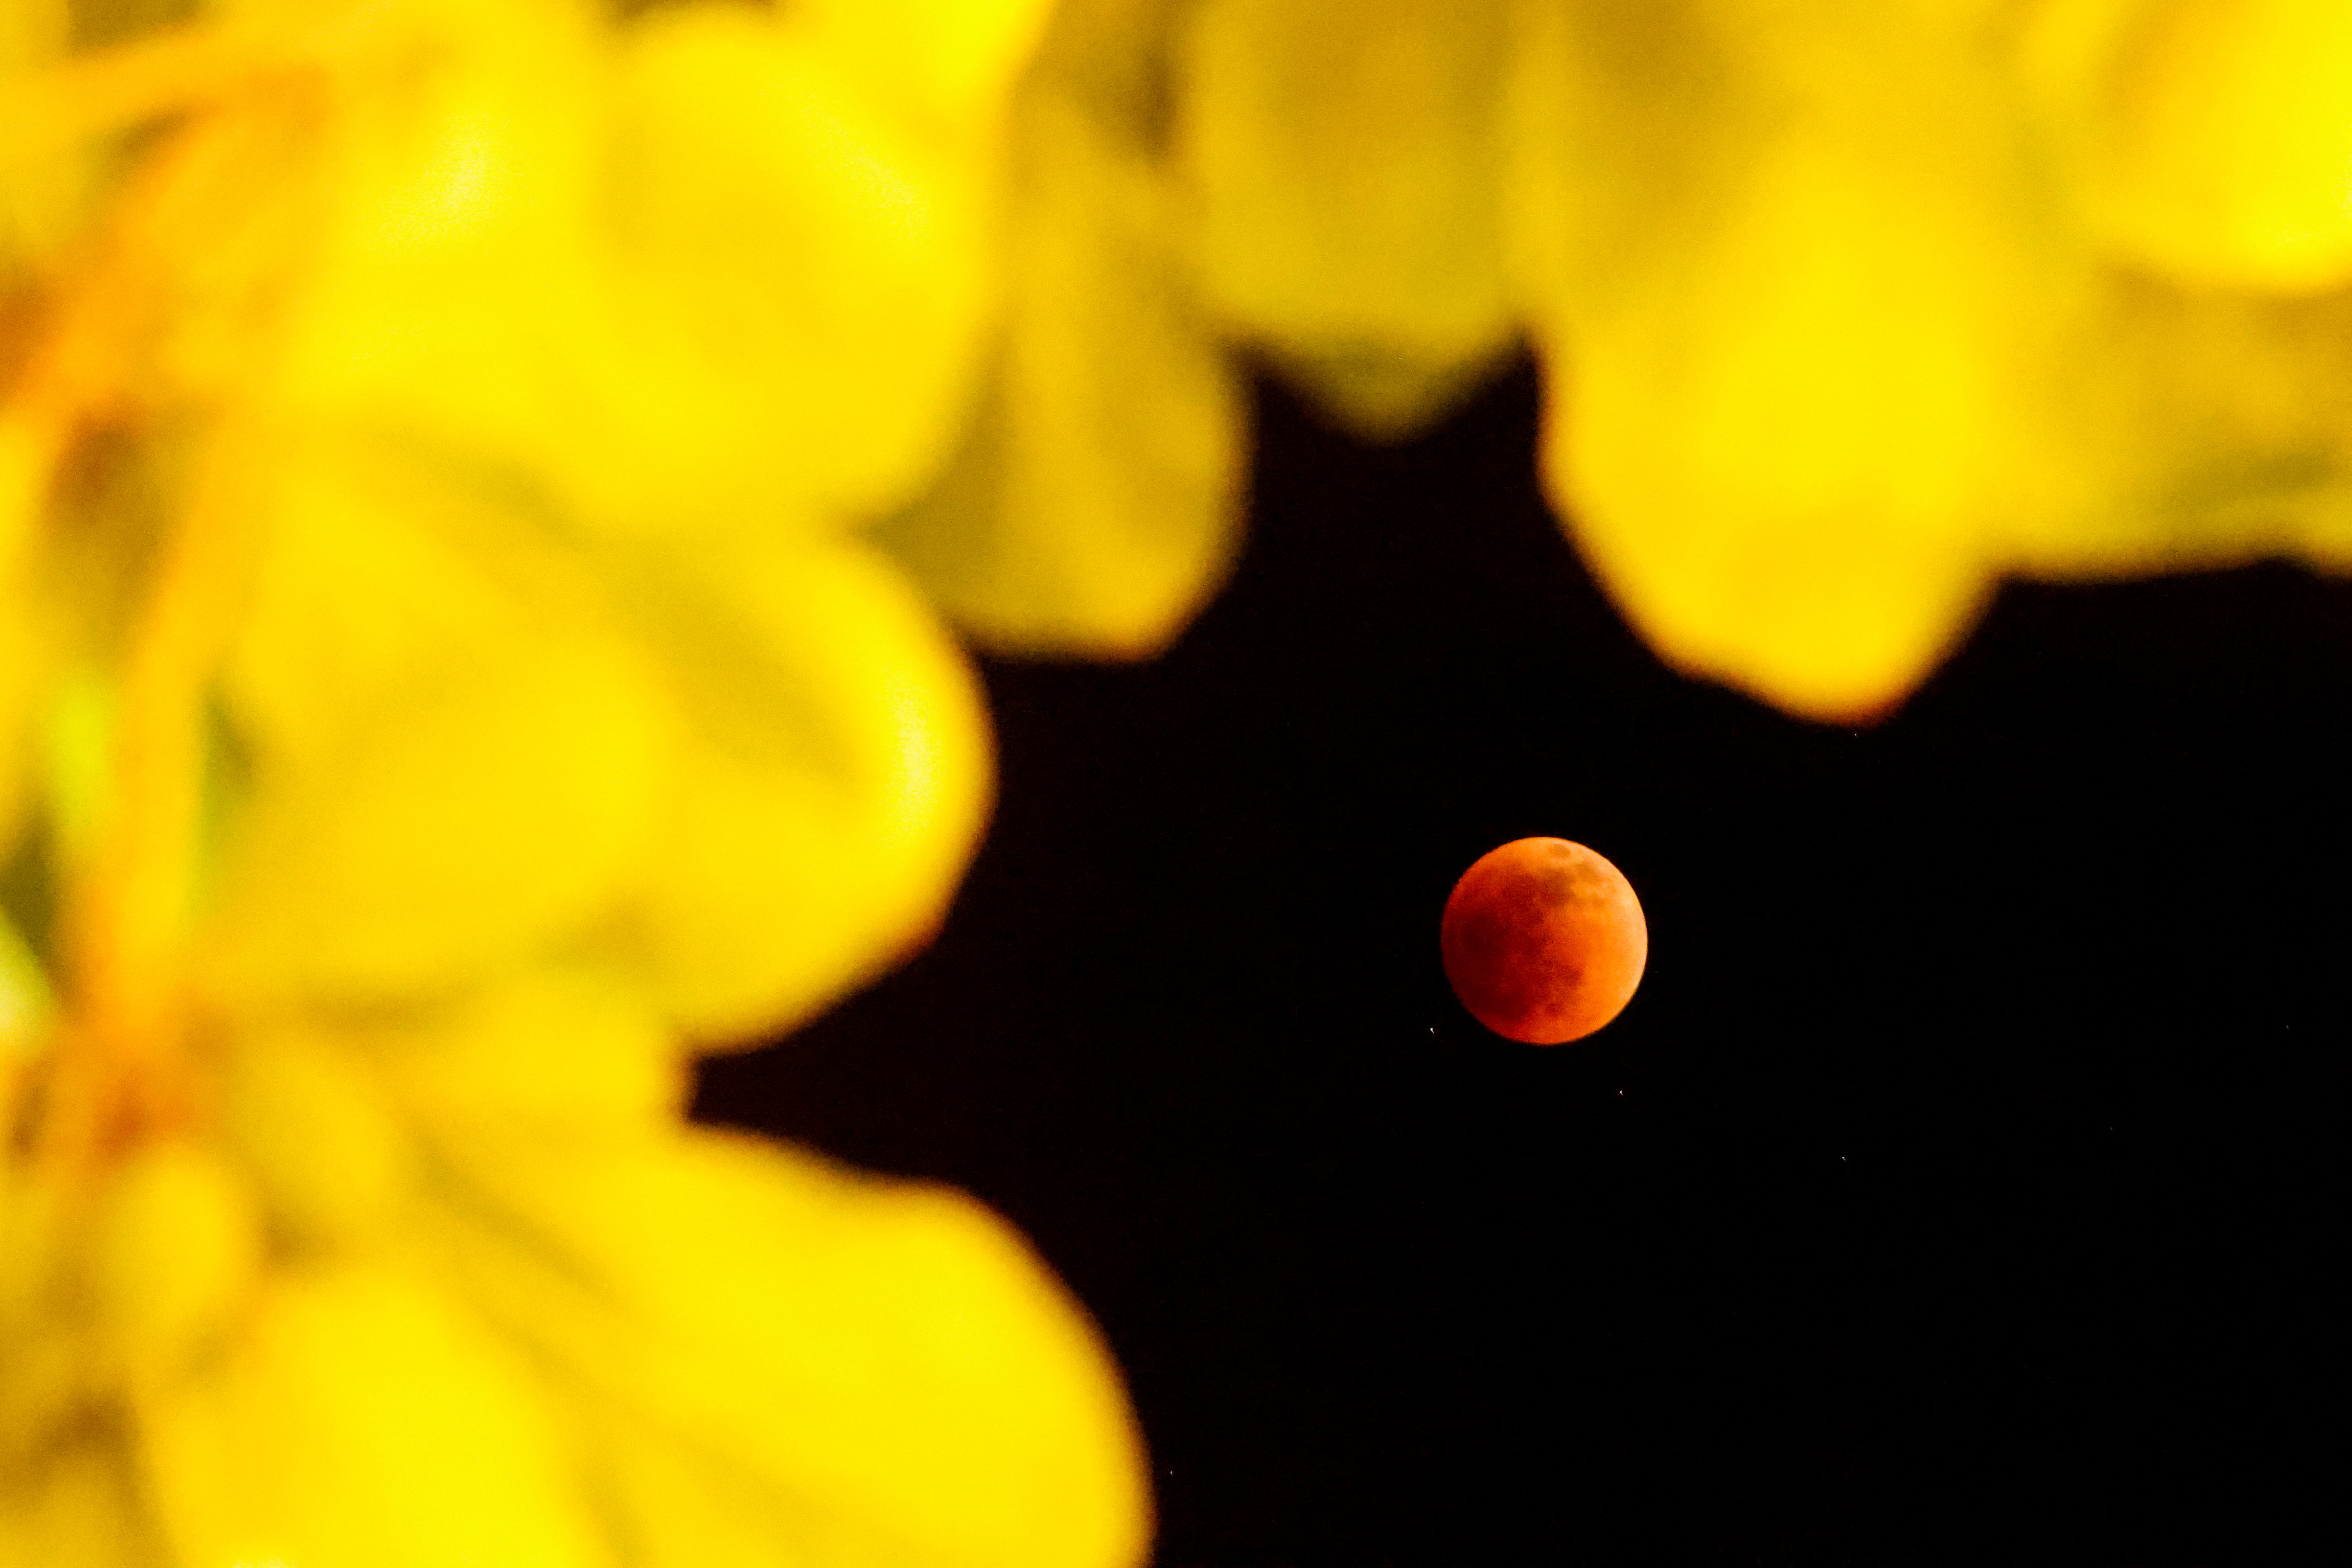 The "Moon of blood" view of Tinum, Mexico (REUTERS/Jose Luis Gonzalez)